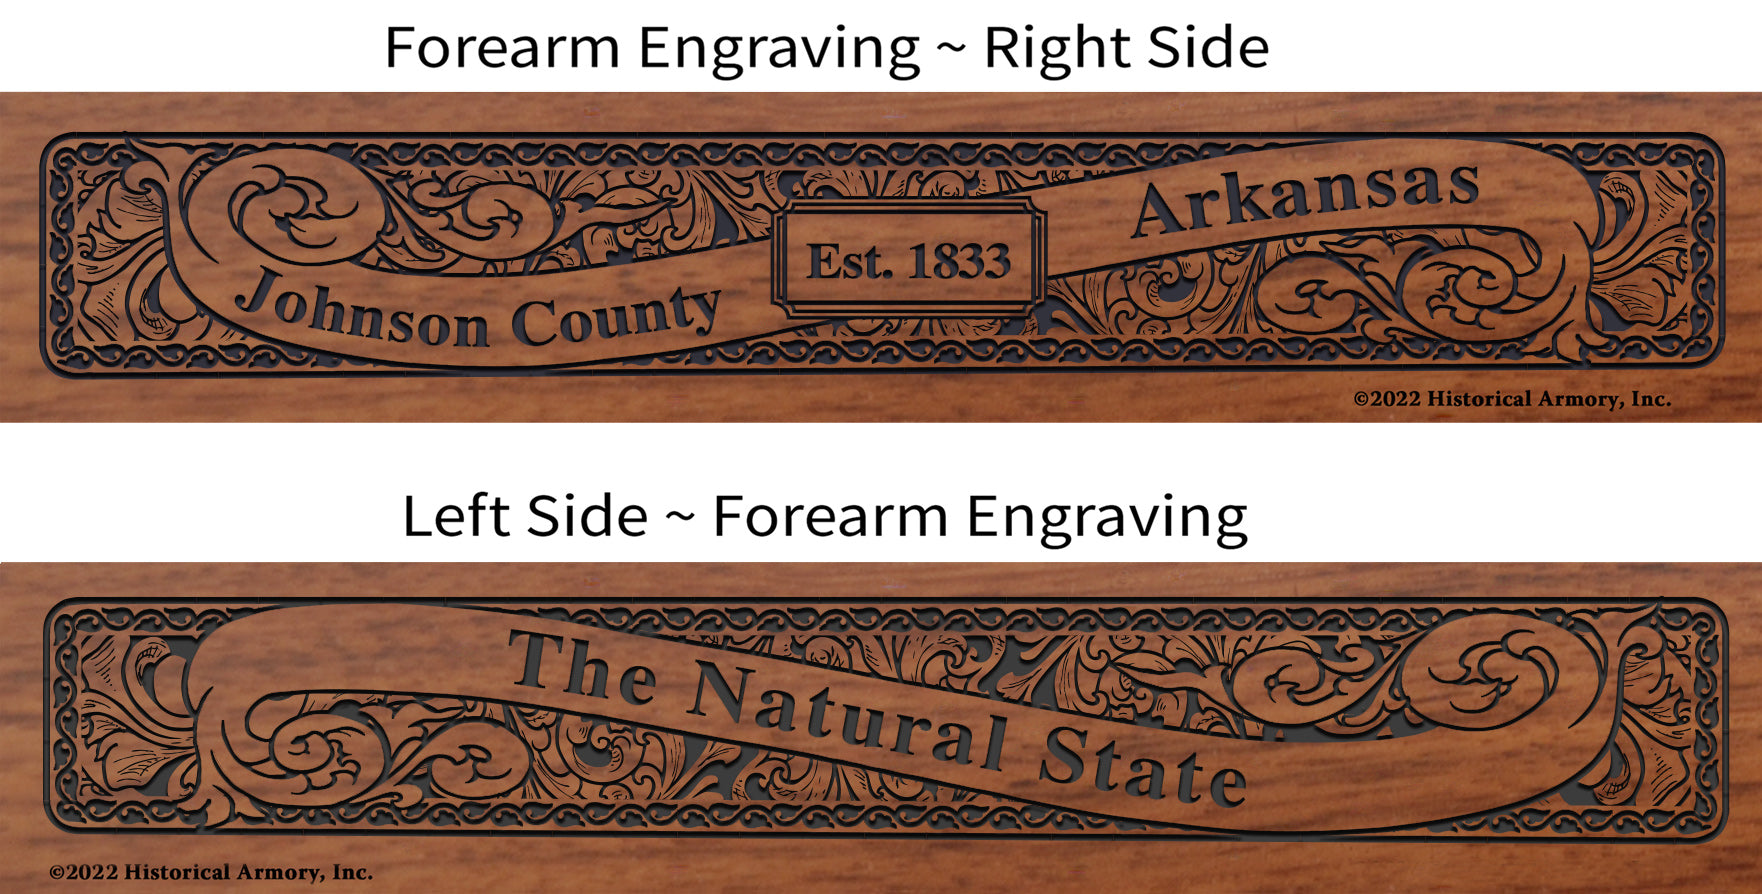 Johnson County Arkansas Engraved Rifle Forearm